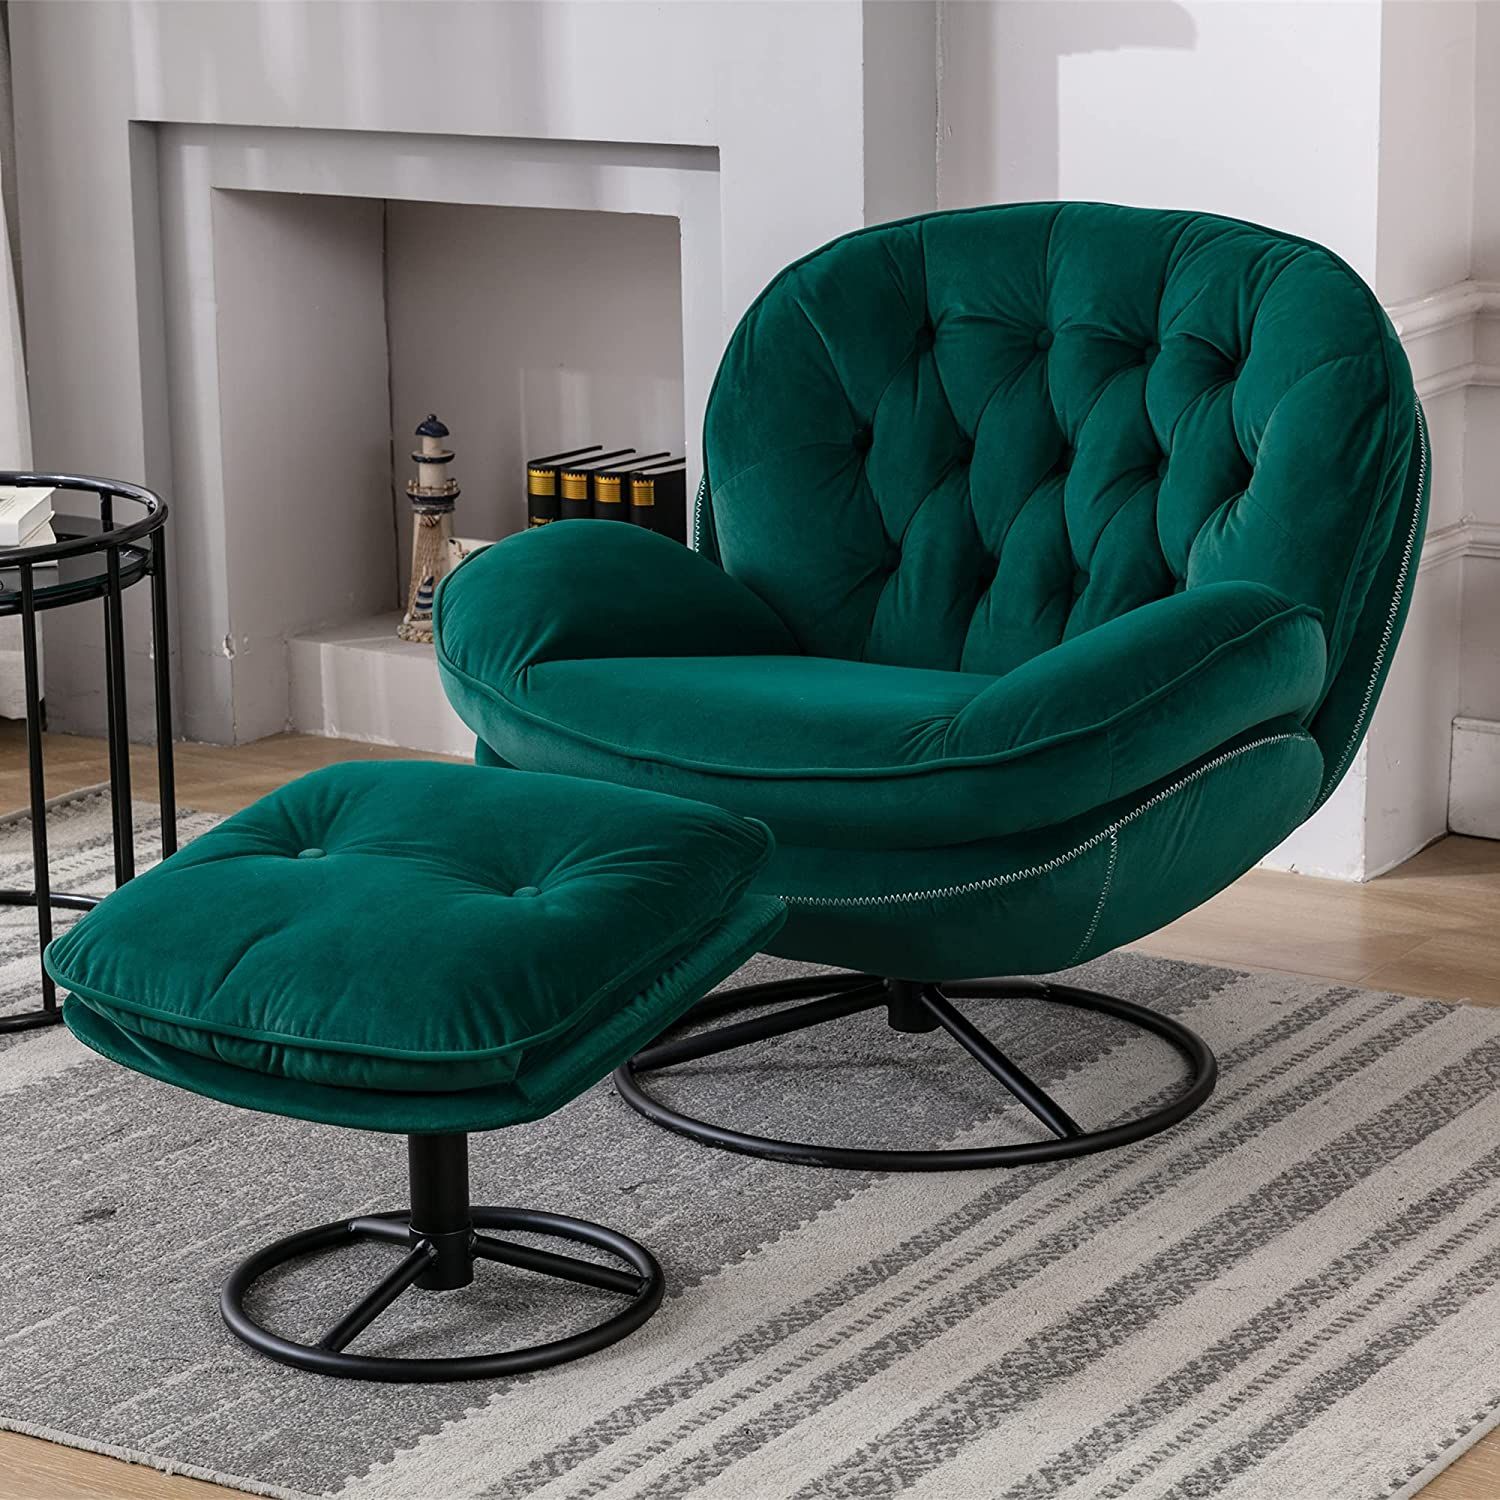 Green velvet swivel chair with matching ottoman